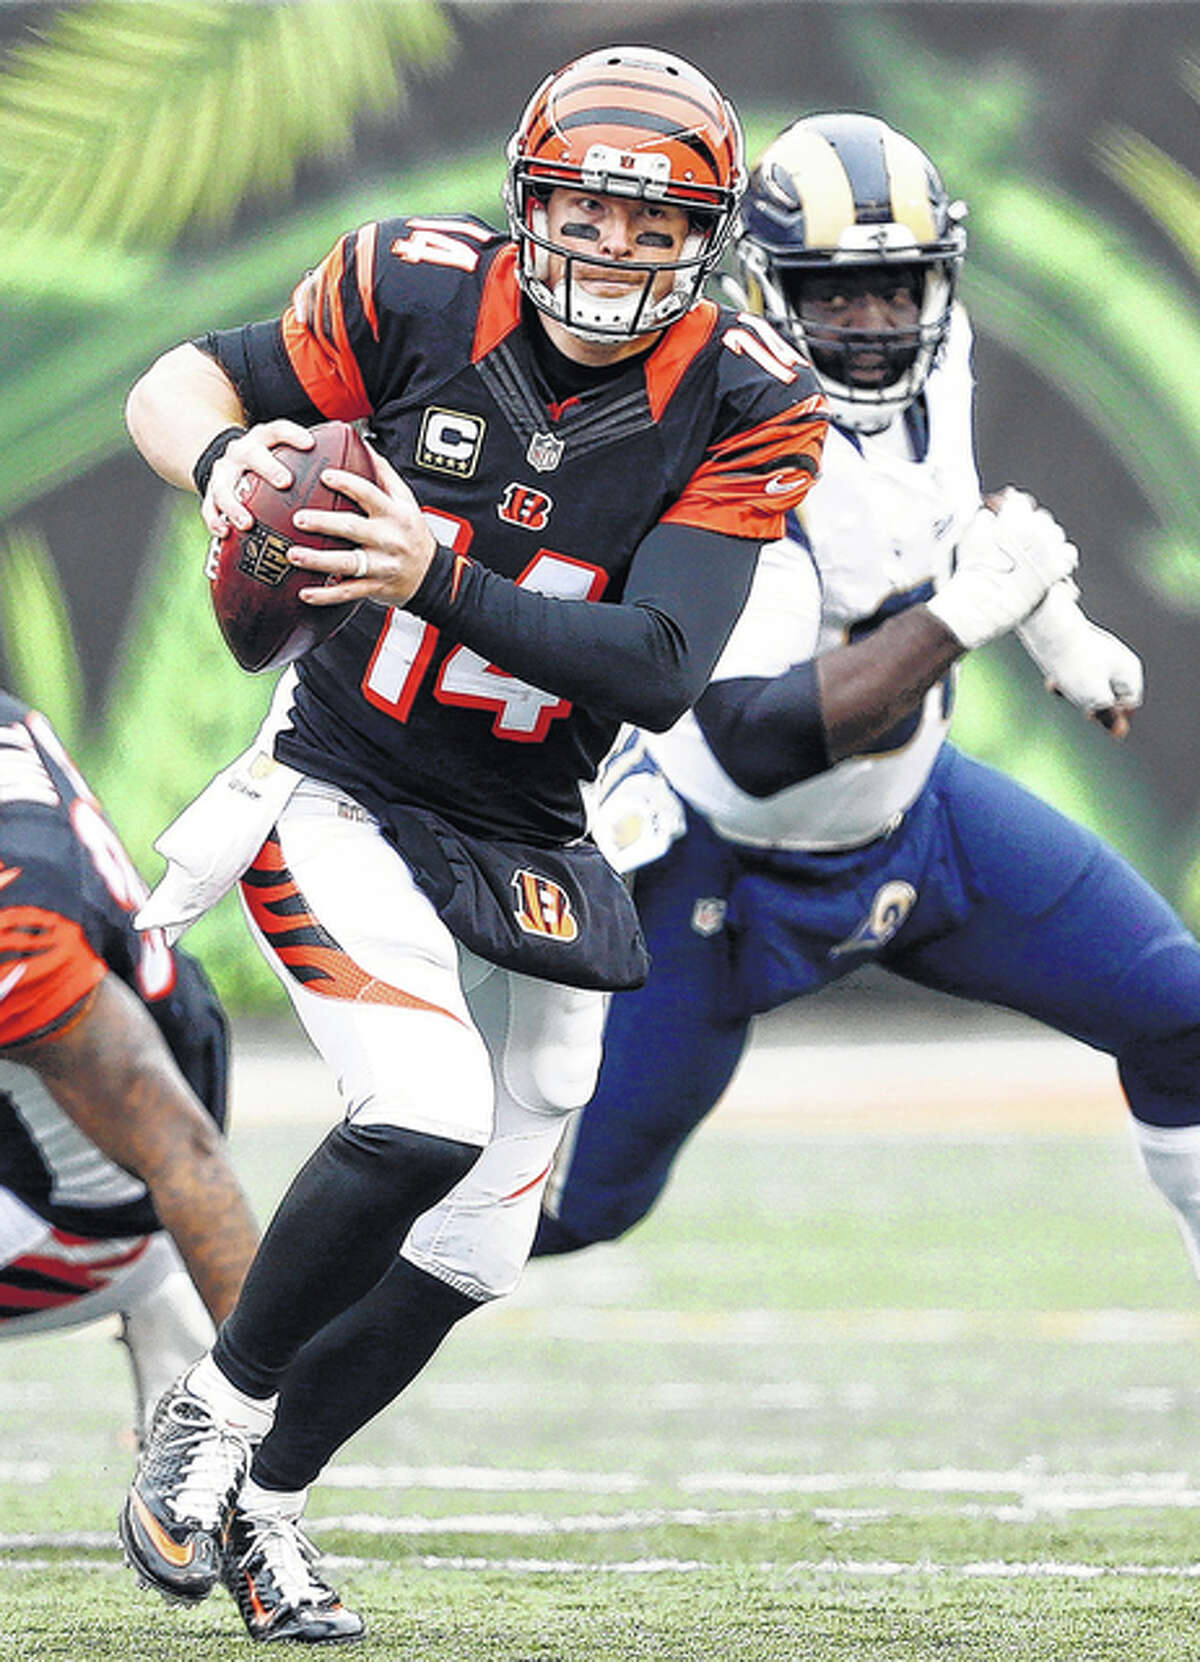 Bengals quarterback Andy Dalton runs the ball against the Rams on Sunday in Cincinnati.